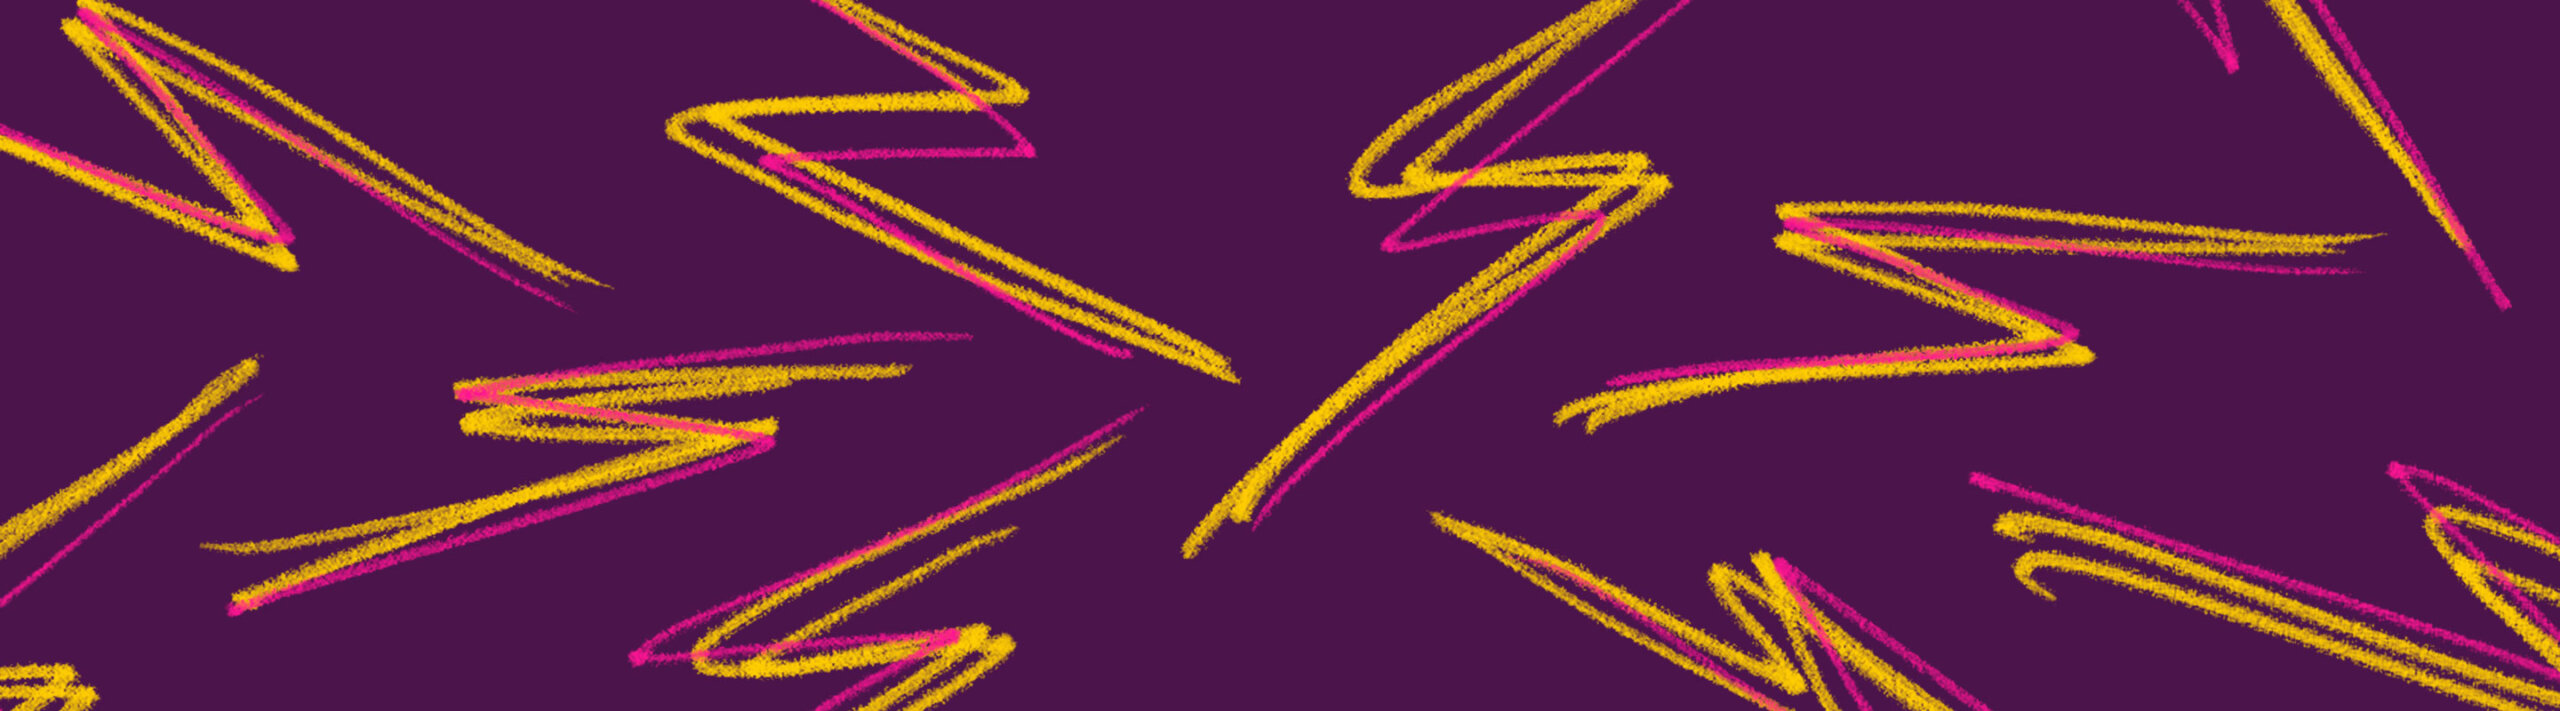 Jaggedy, zig-zag lines race around a purple backdrop